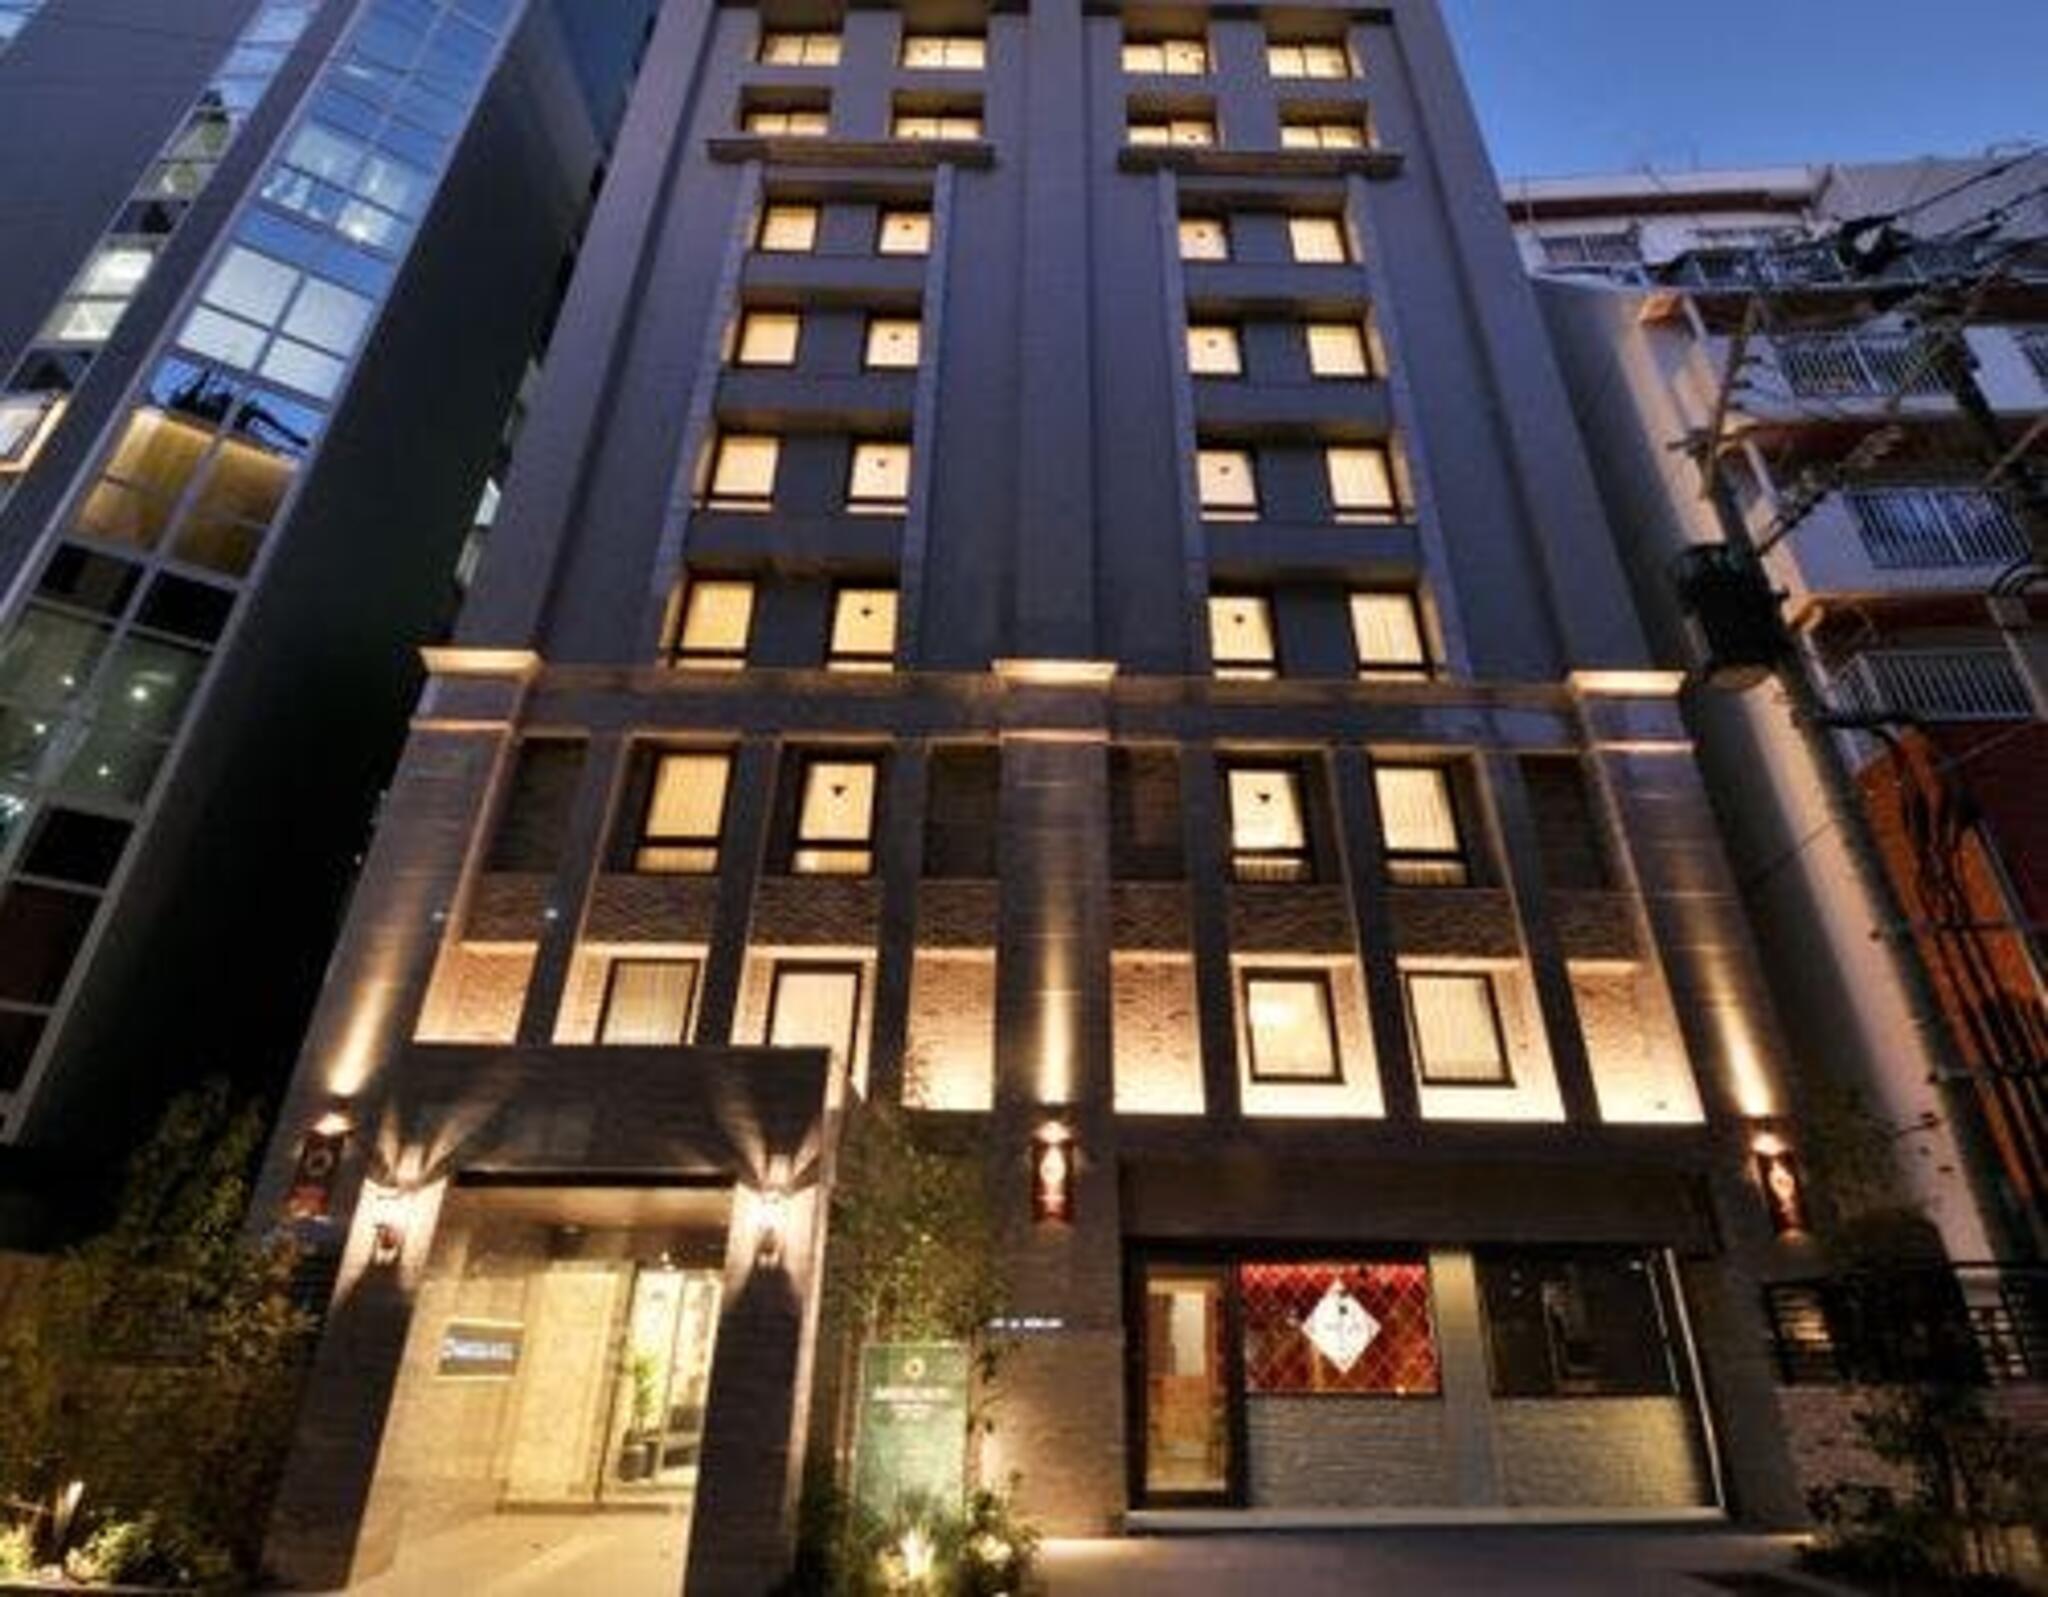 AMISTAD HOTEL FUKUOKA(アミスタホテル福岡)の代表写真8